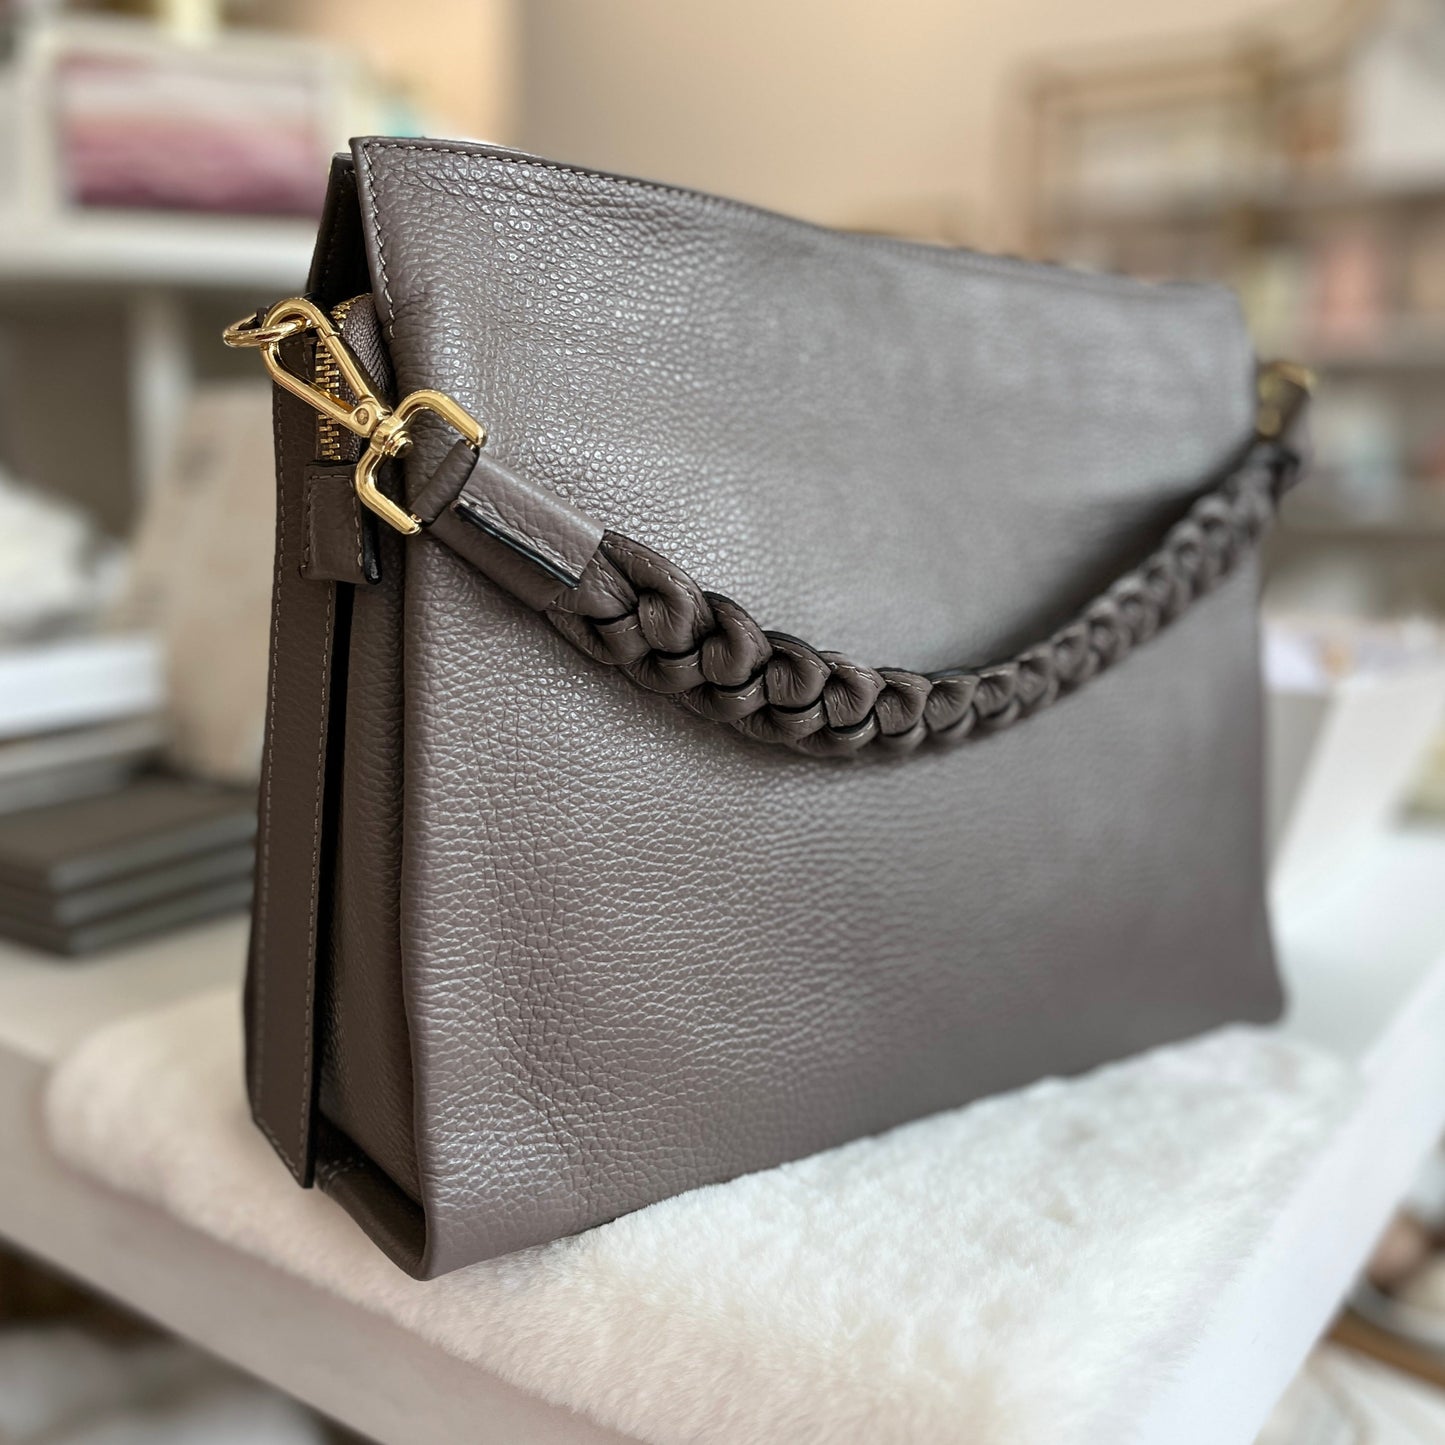 Italian Leather Handbag with Braided Strap